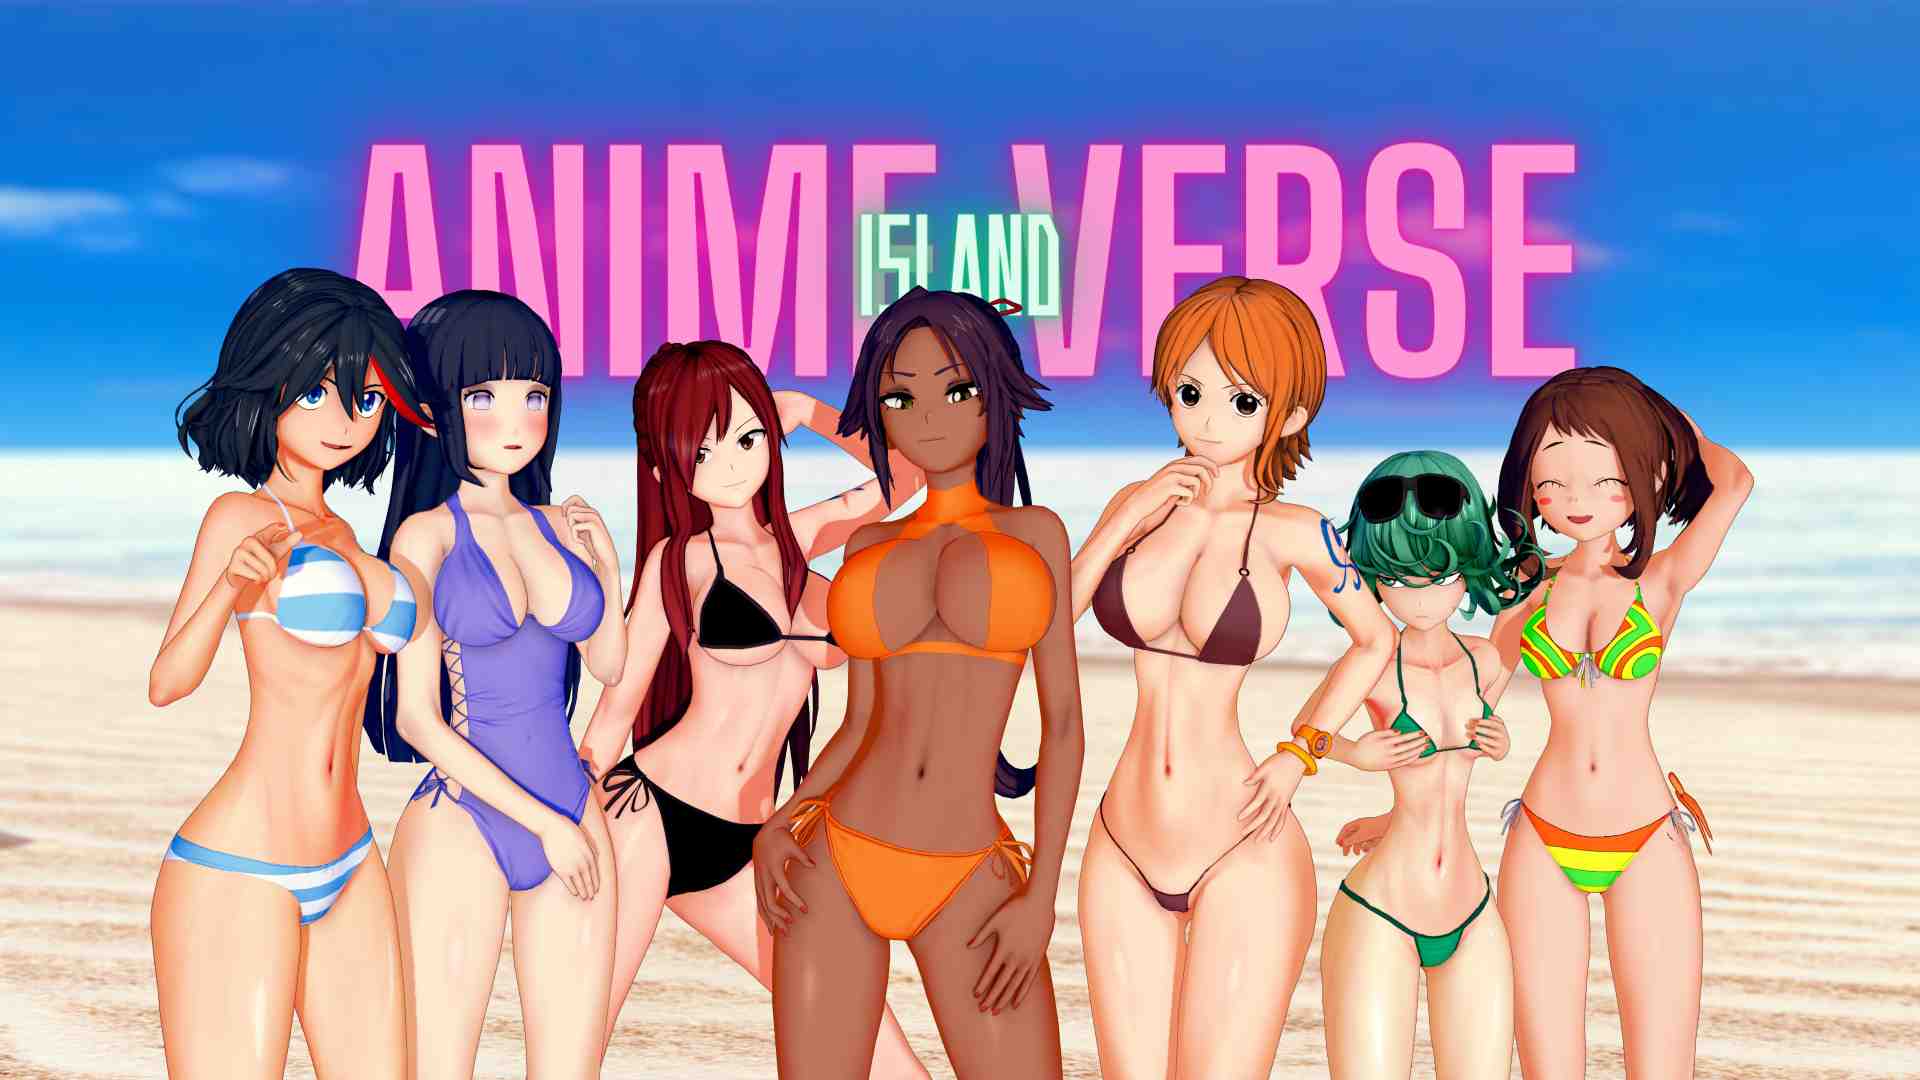 Animeverse island porn game